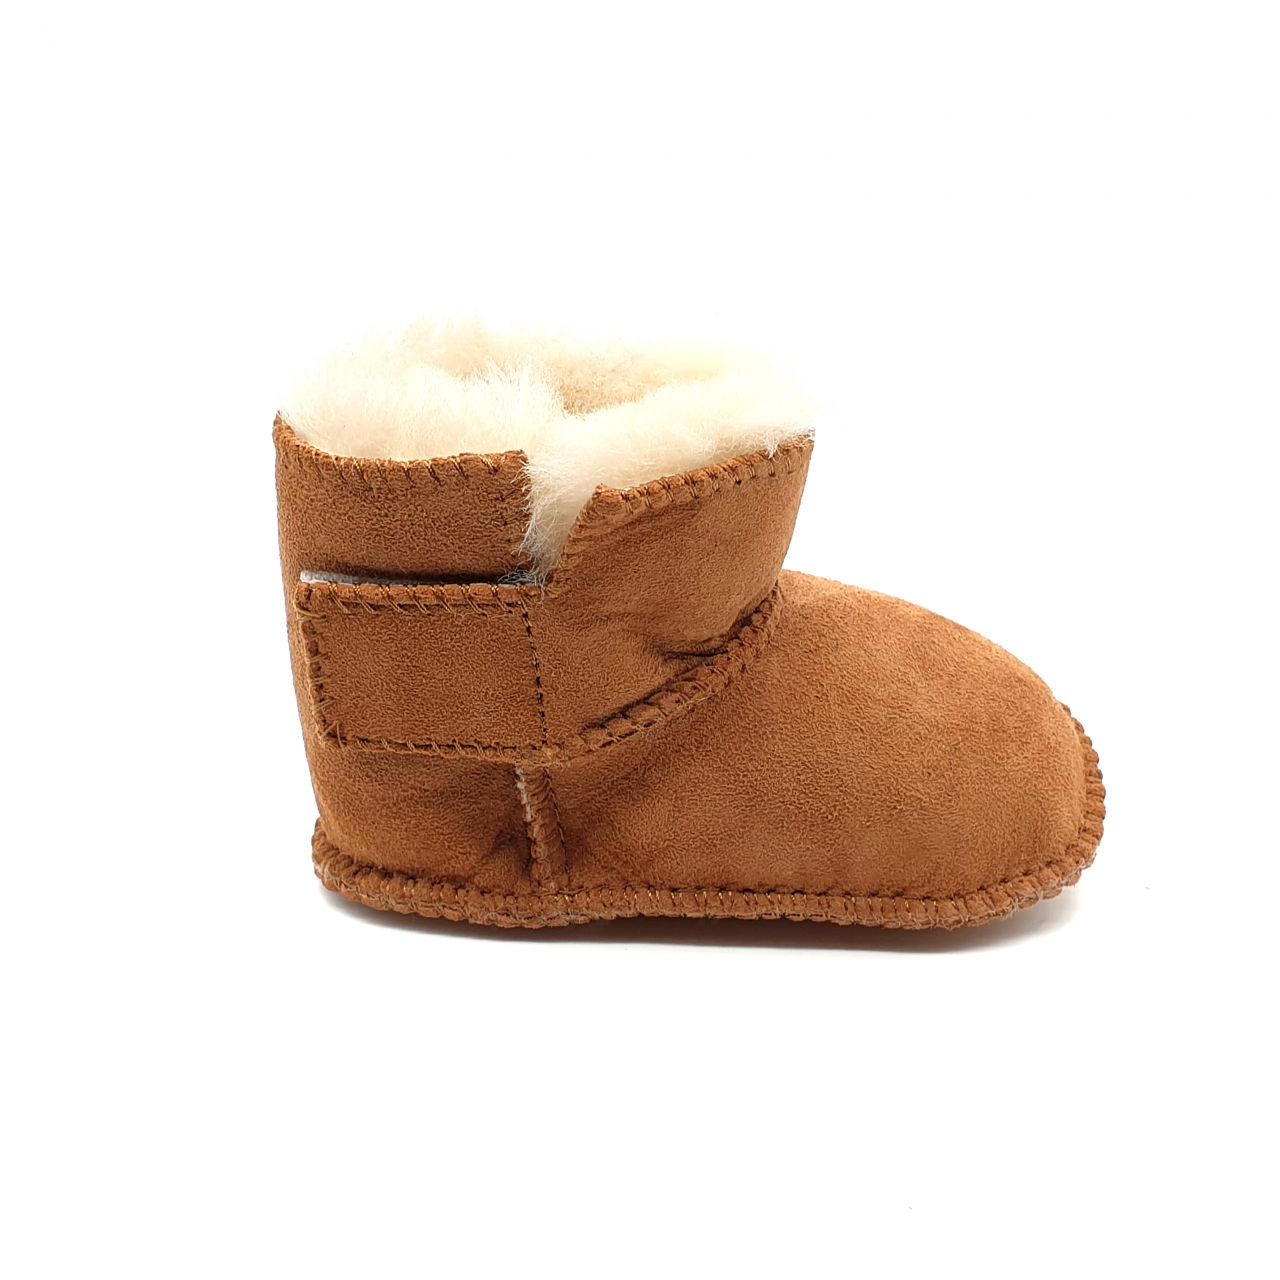 Buy Chestnut Baby Booties in Sheepskin: Online from Jacobs & Dalton UK